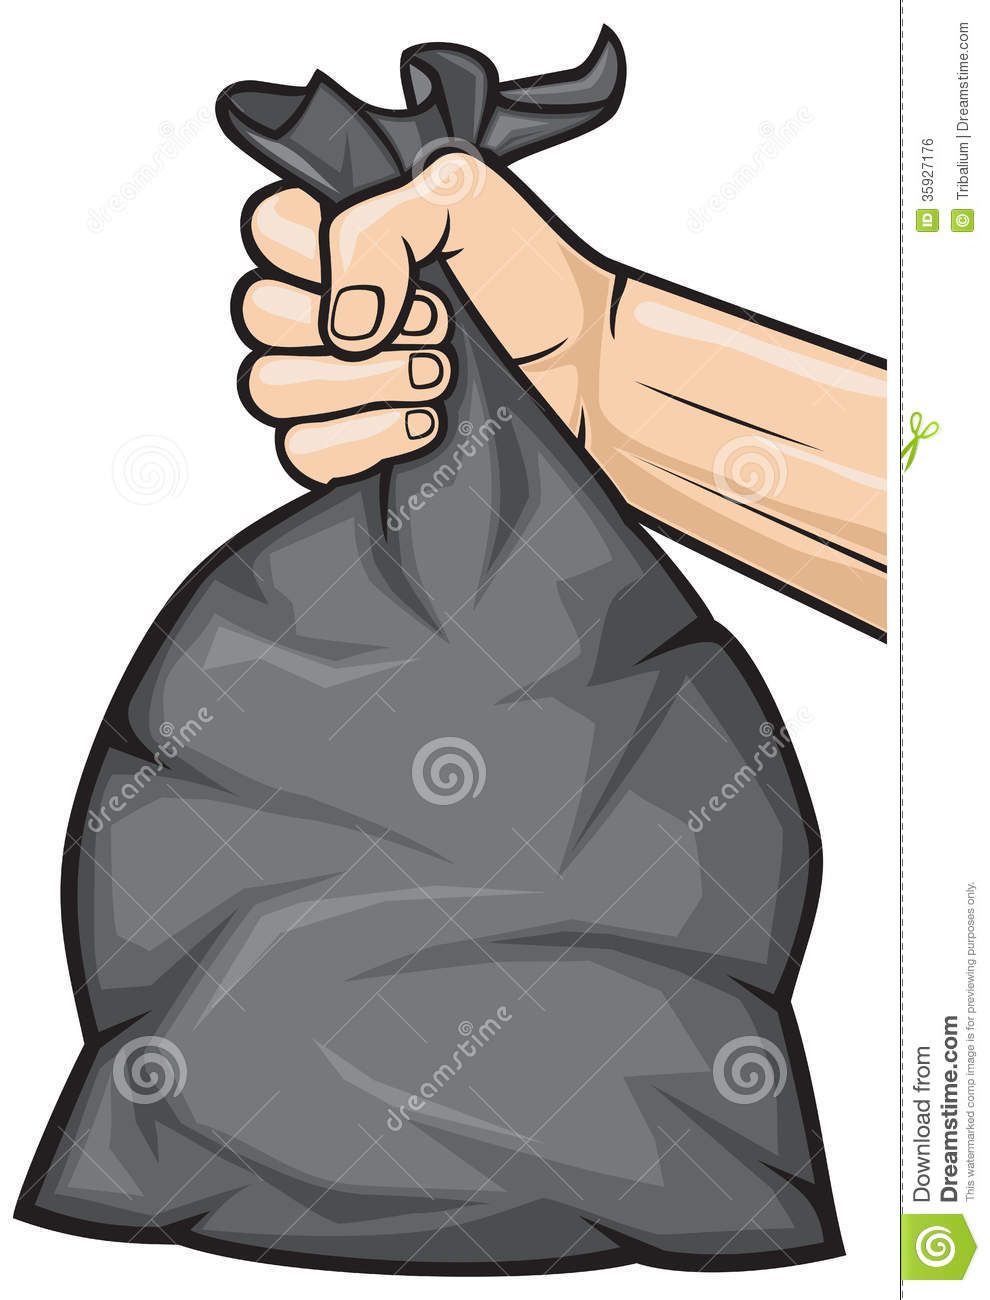 Hand Holding Garbage Bag Royalty Free Stock Image   Image  35927176